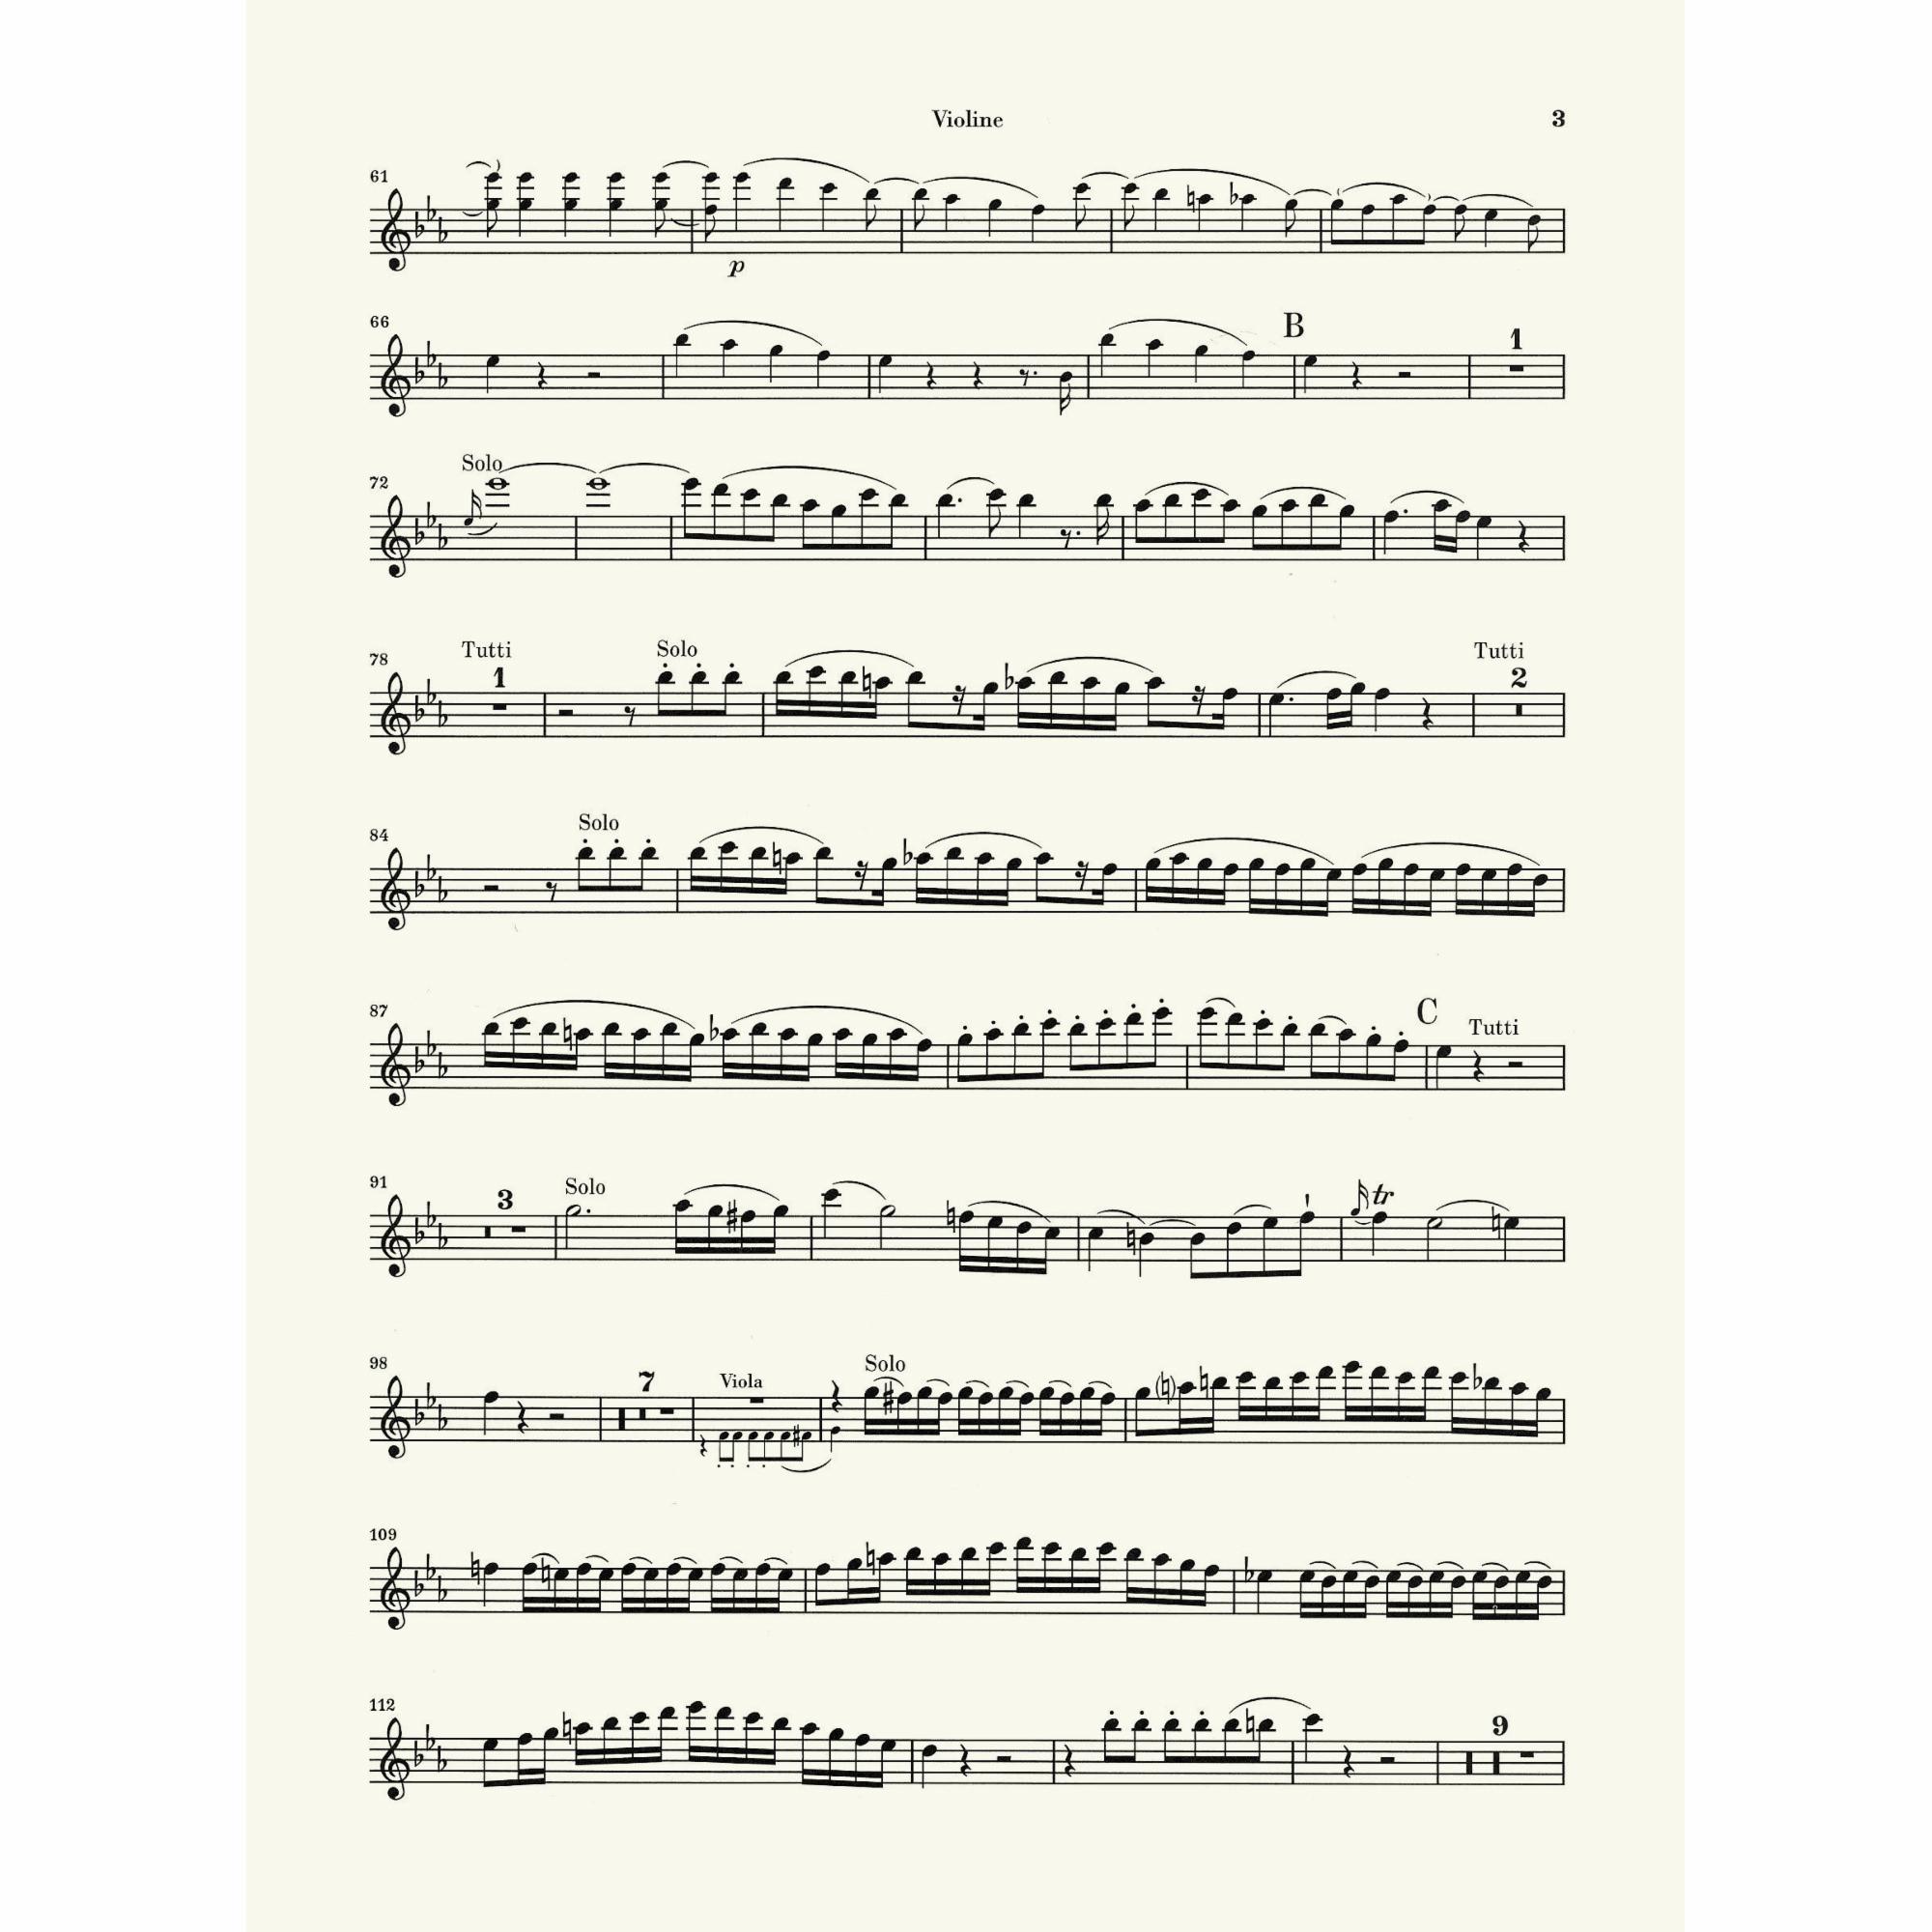 Sample: Urtext Violin (Pg. 3)